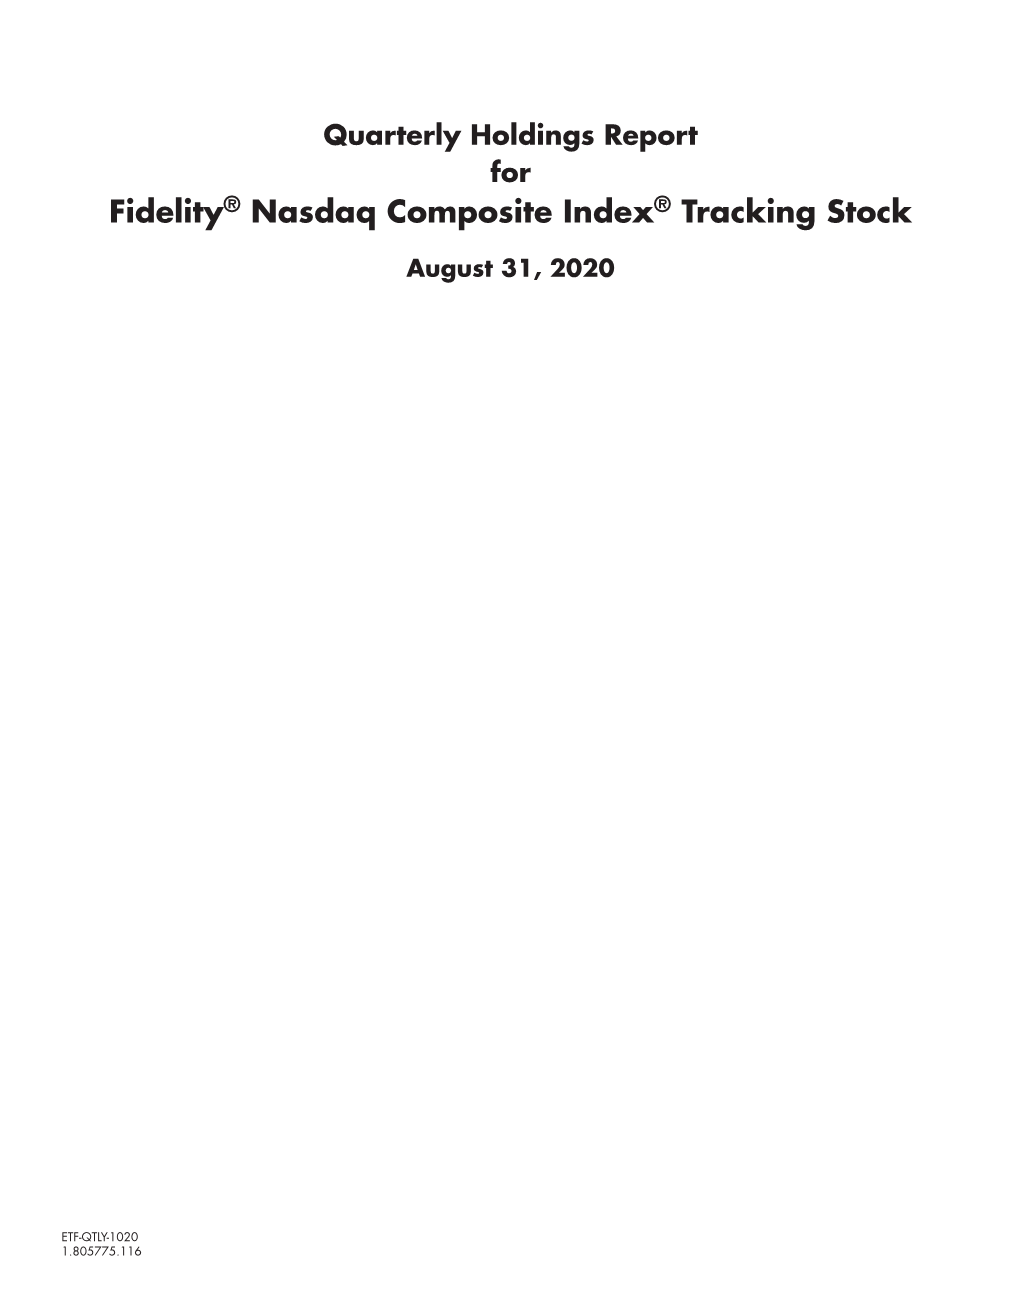 Fidelity® Nasdaq Composite Index® Tracking Stock